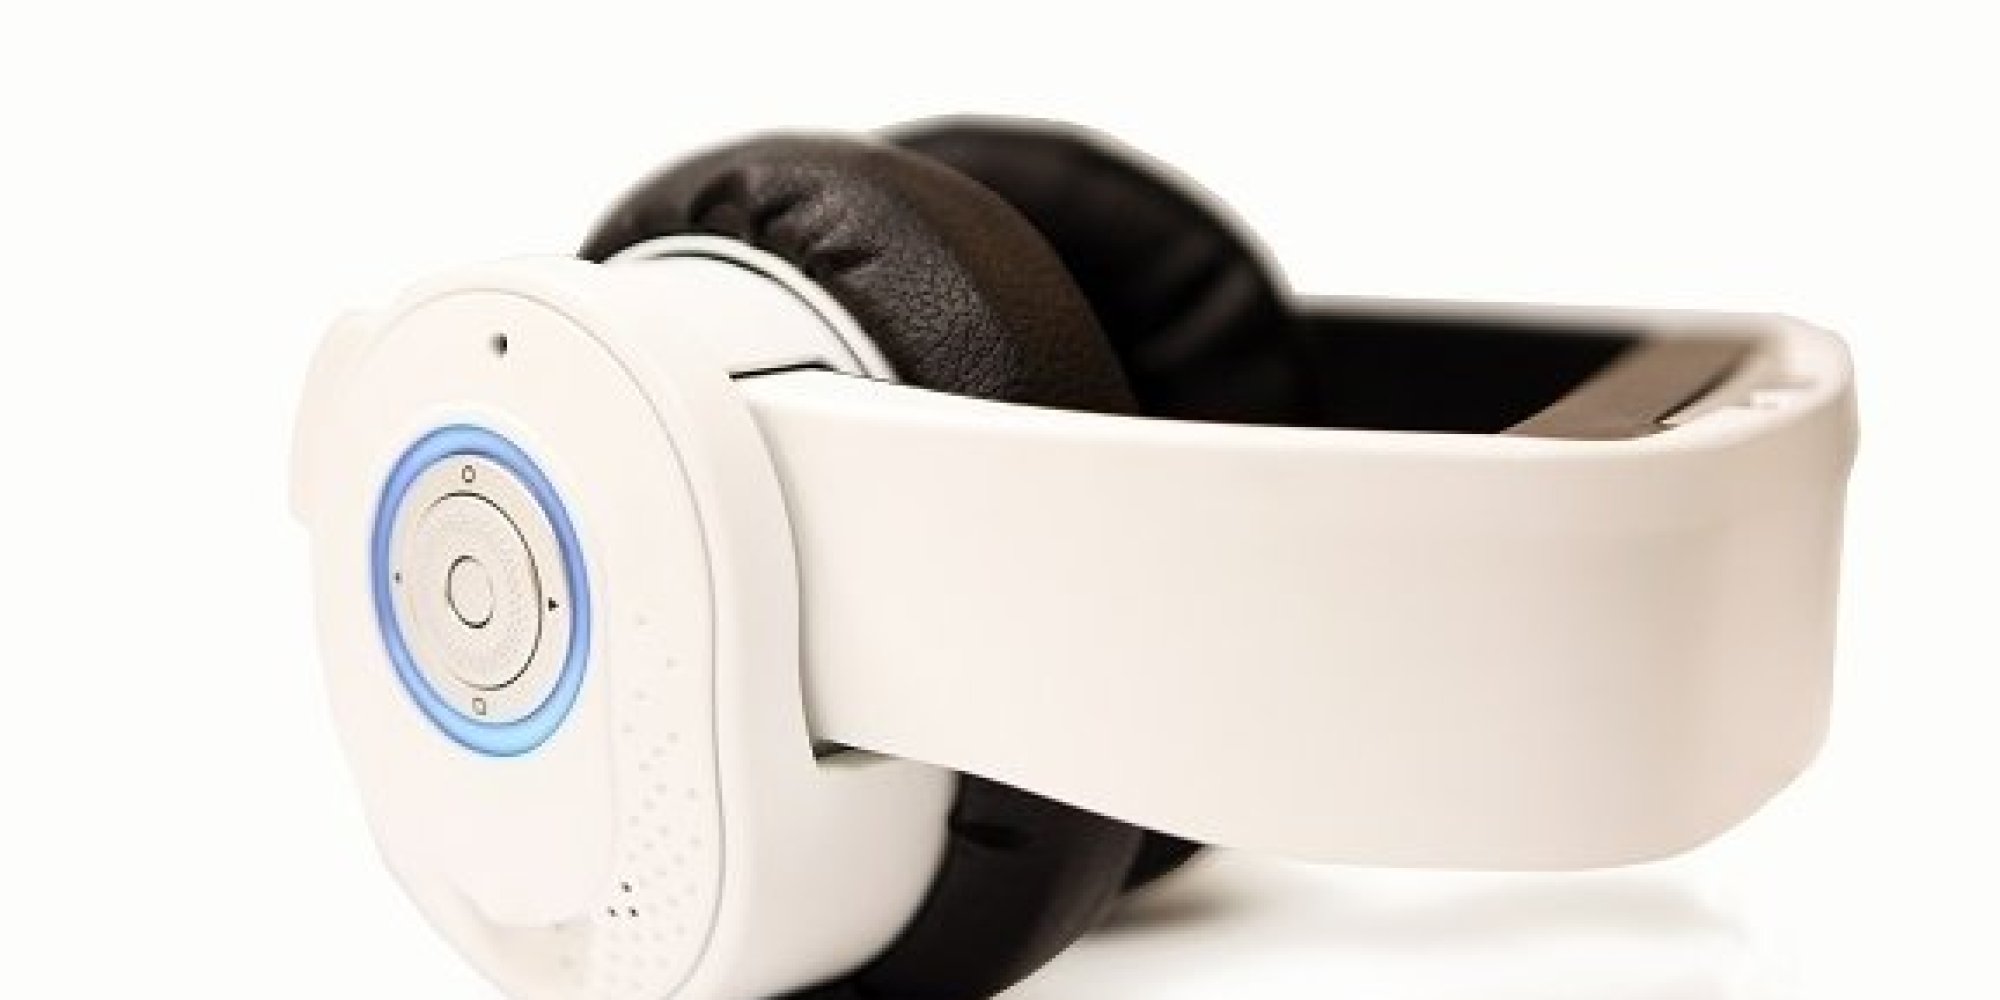 VRGE VR Headset Dock Passes 50% on Kickstarter with One 